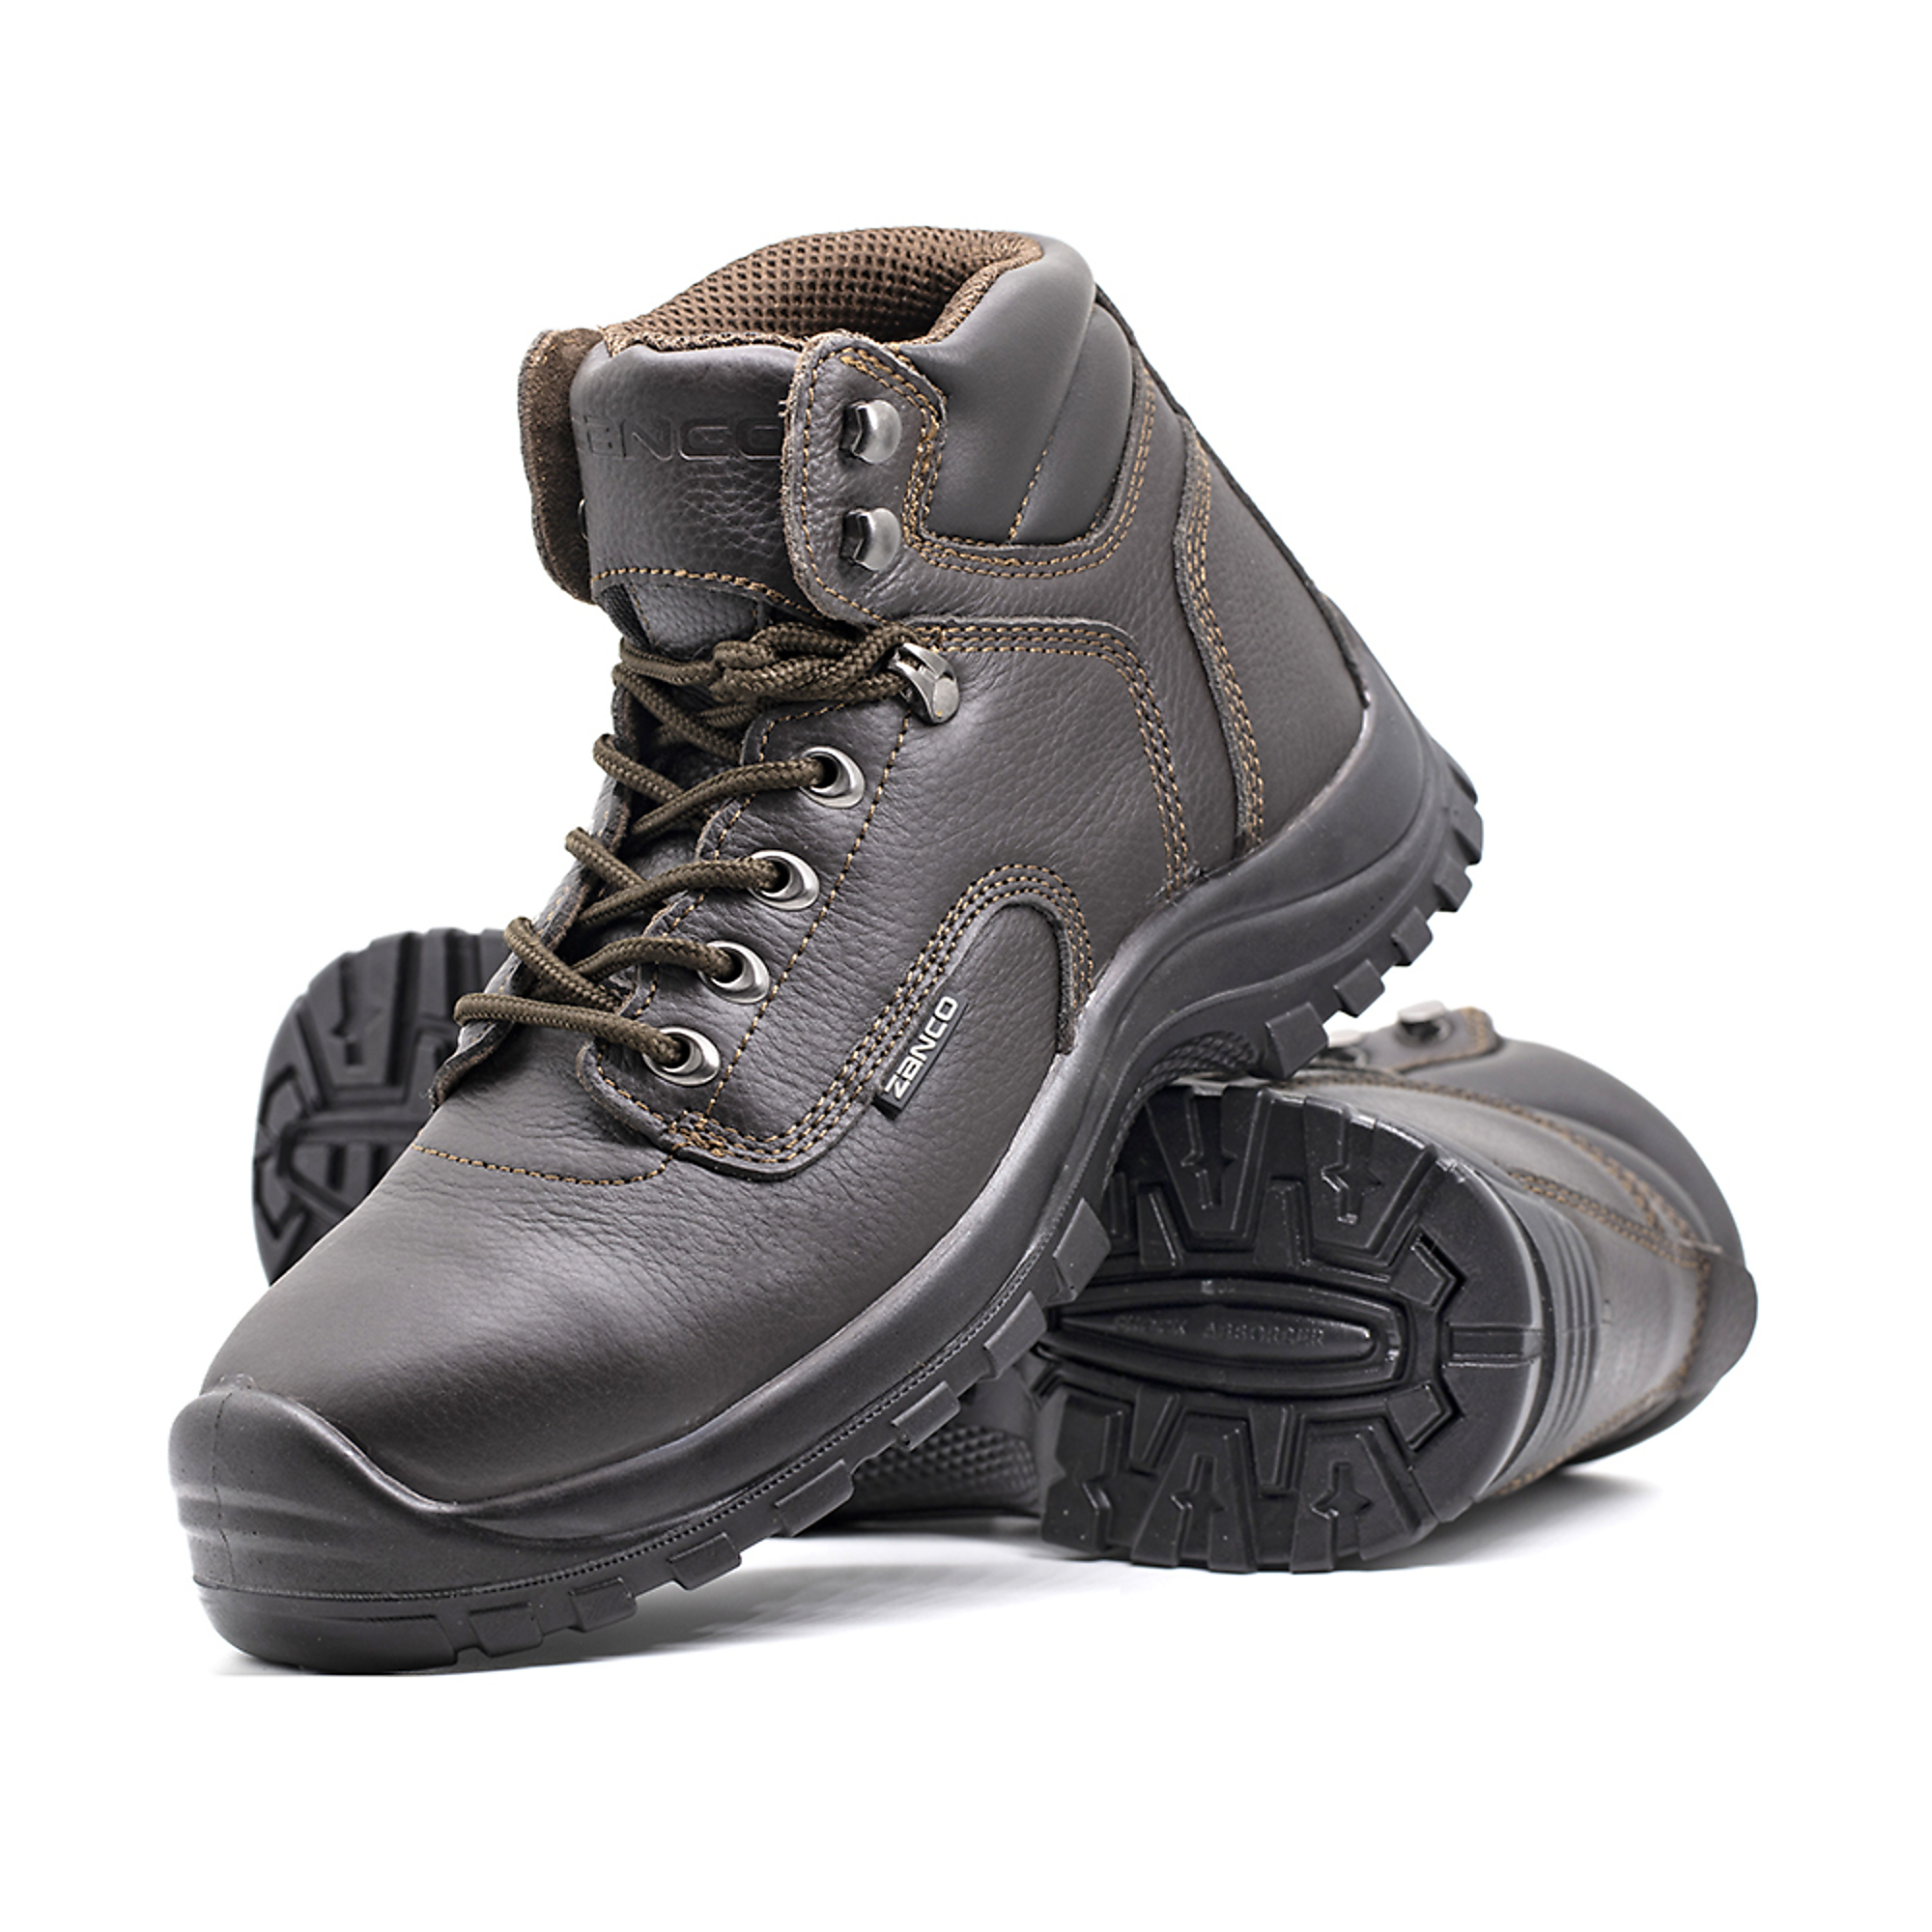 Zanco, Men's Waterproof,Steel toe,EH,Safety boots, Size 9 1/2, Width Medium, Color BROWN, Model 7668-SE-9.5